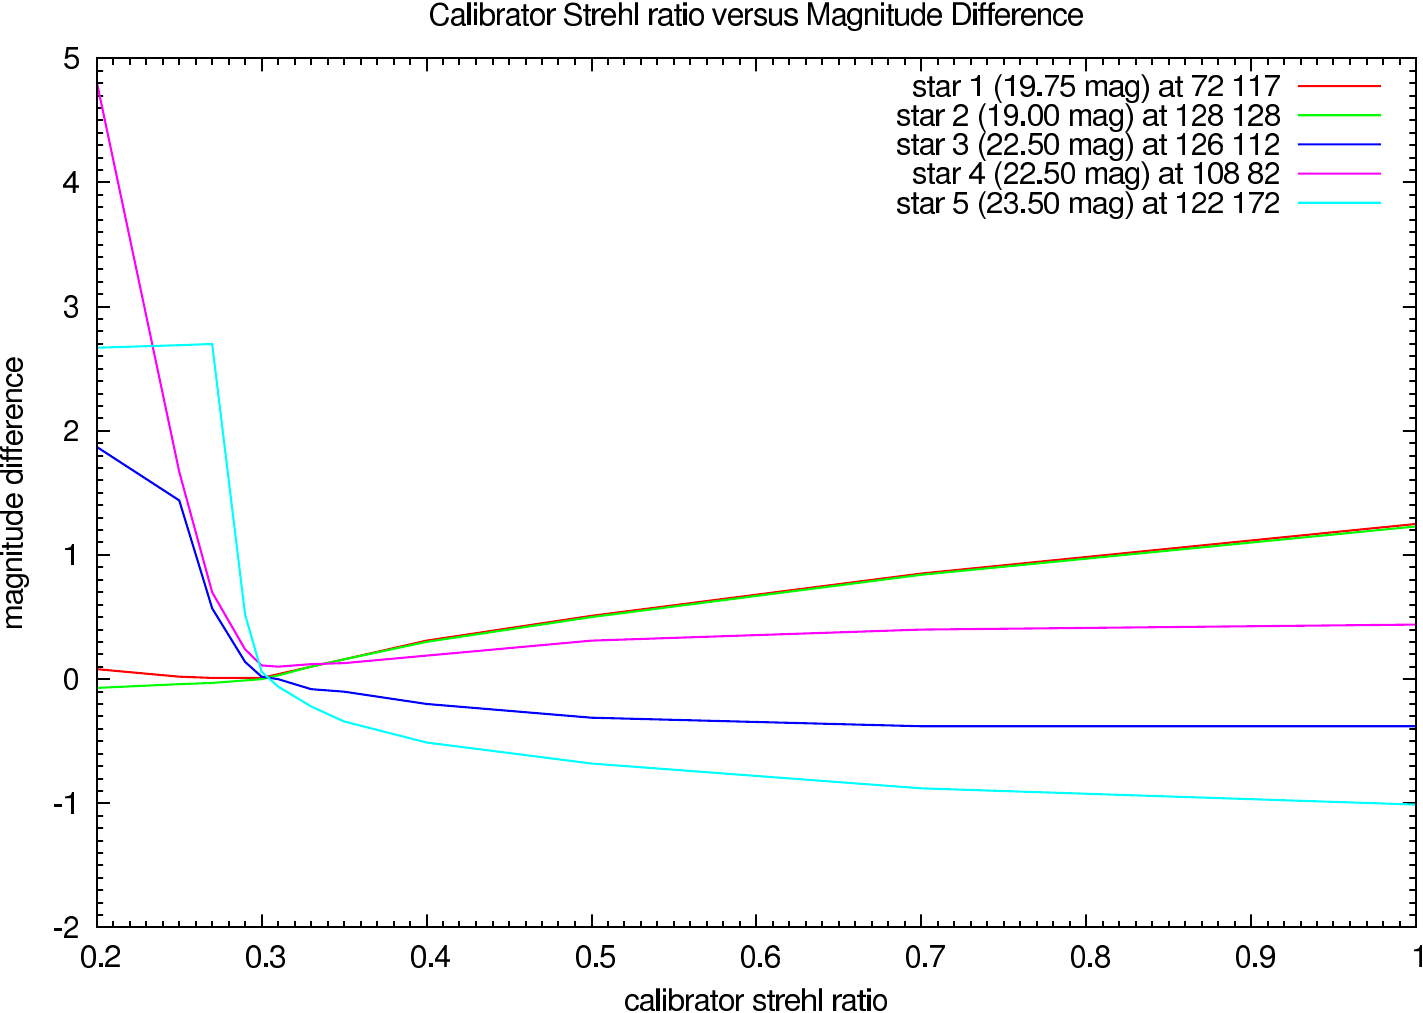 Photometric errors depending on the calibrator strehl ratio using Richardson-Lucy (J-Band)